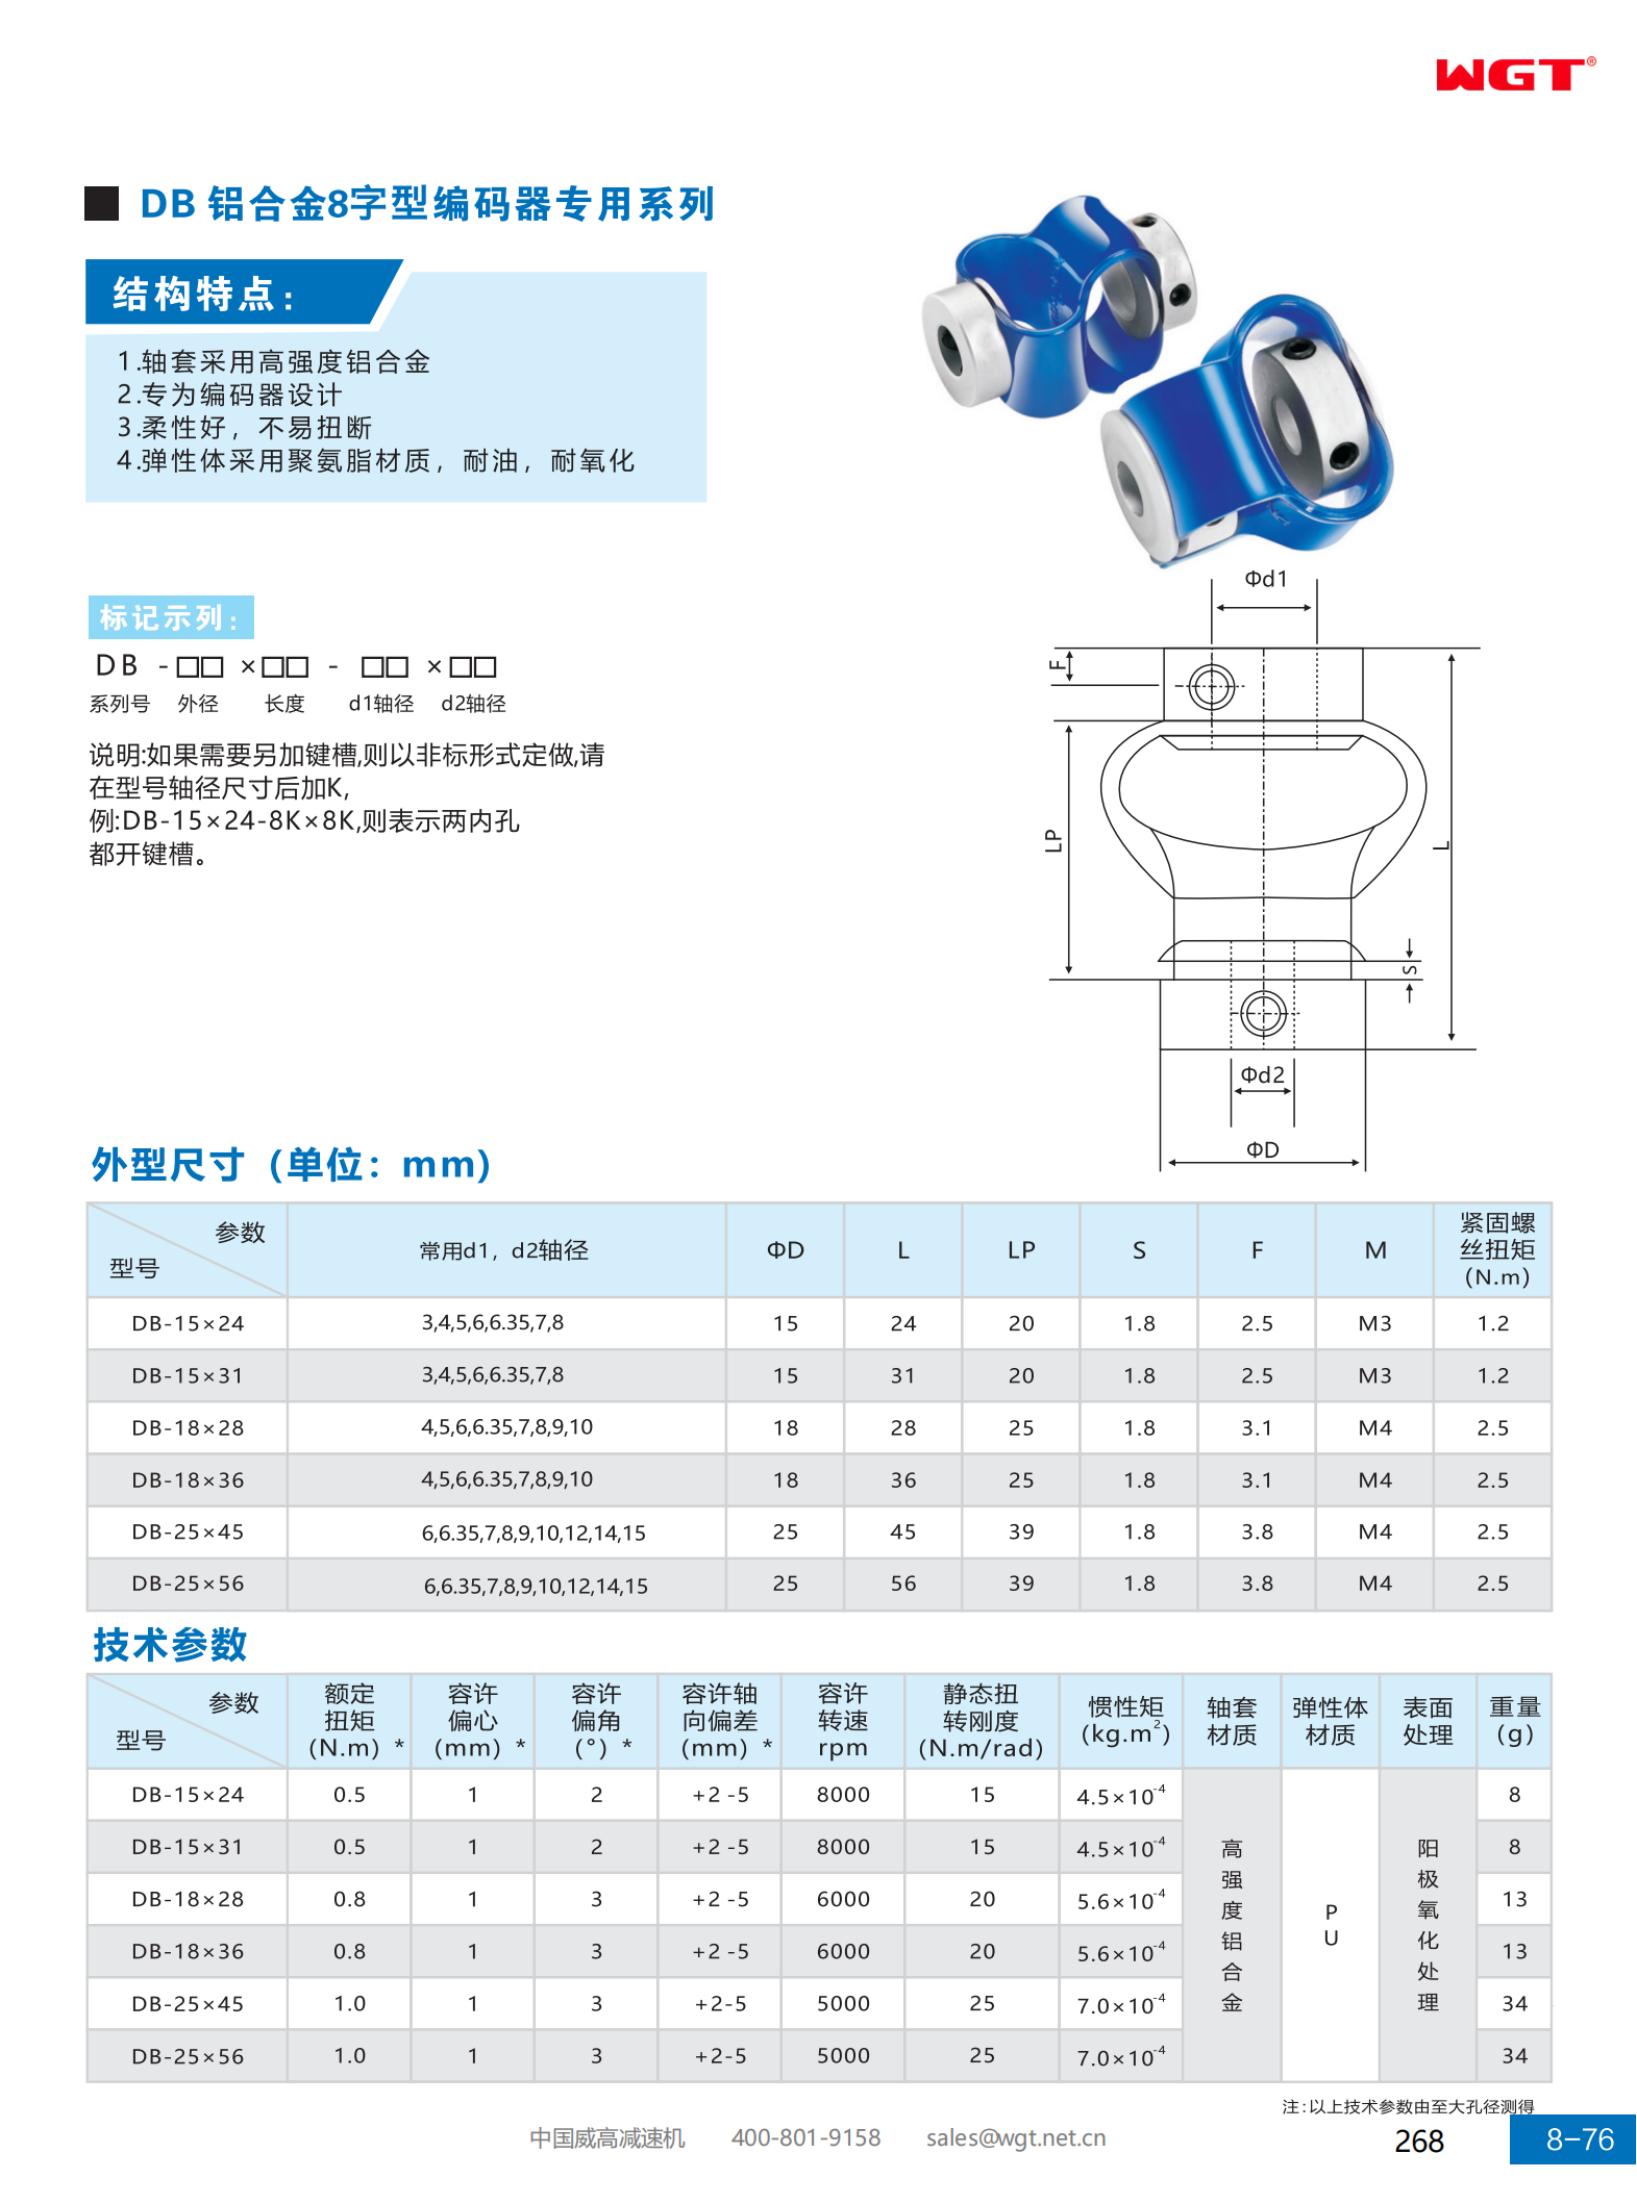 DB aluminum alloy 8-shaped encoder special series